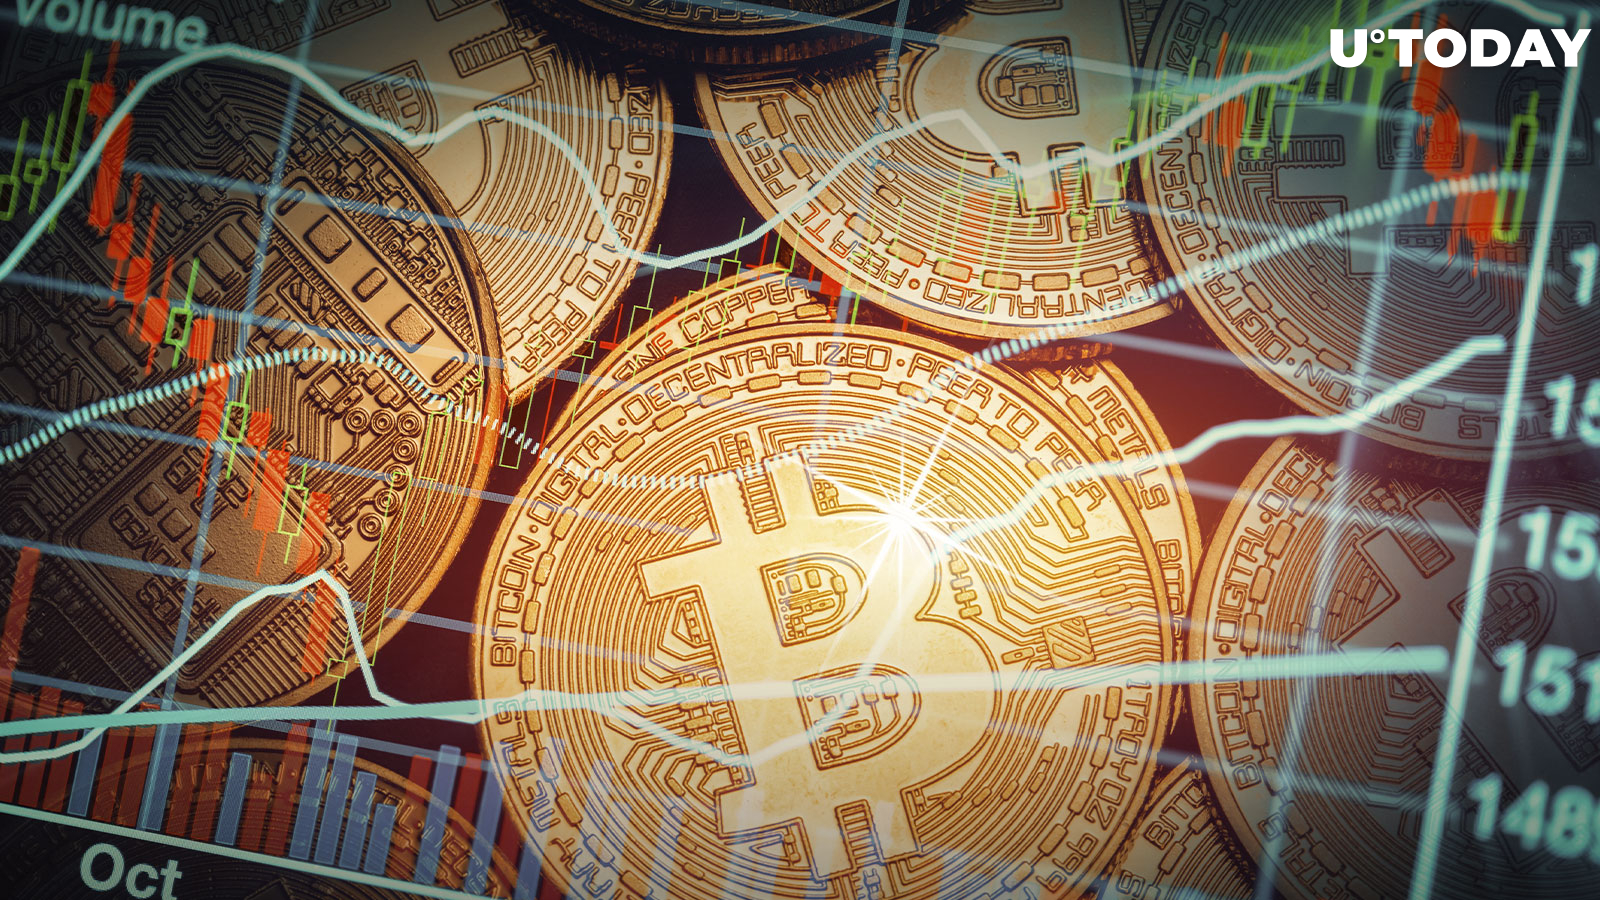 Bitcoin Bulls Could Eye $25,000 Next, Analyst Says